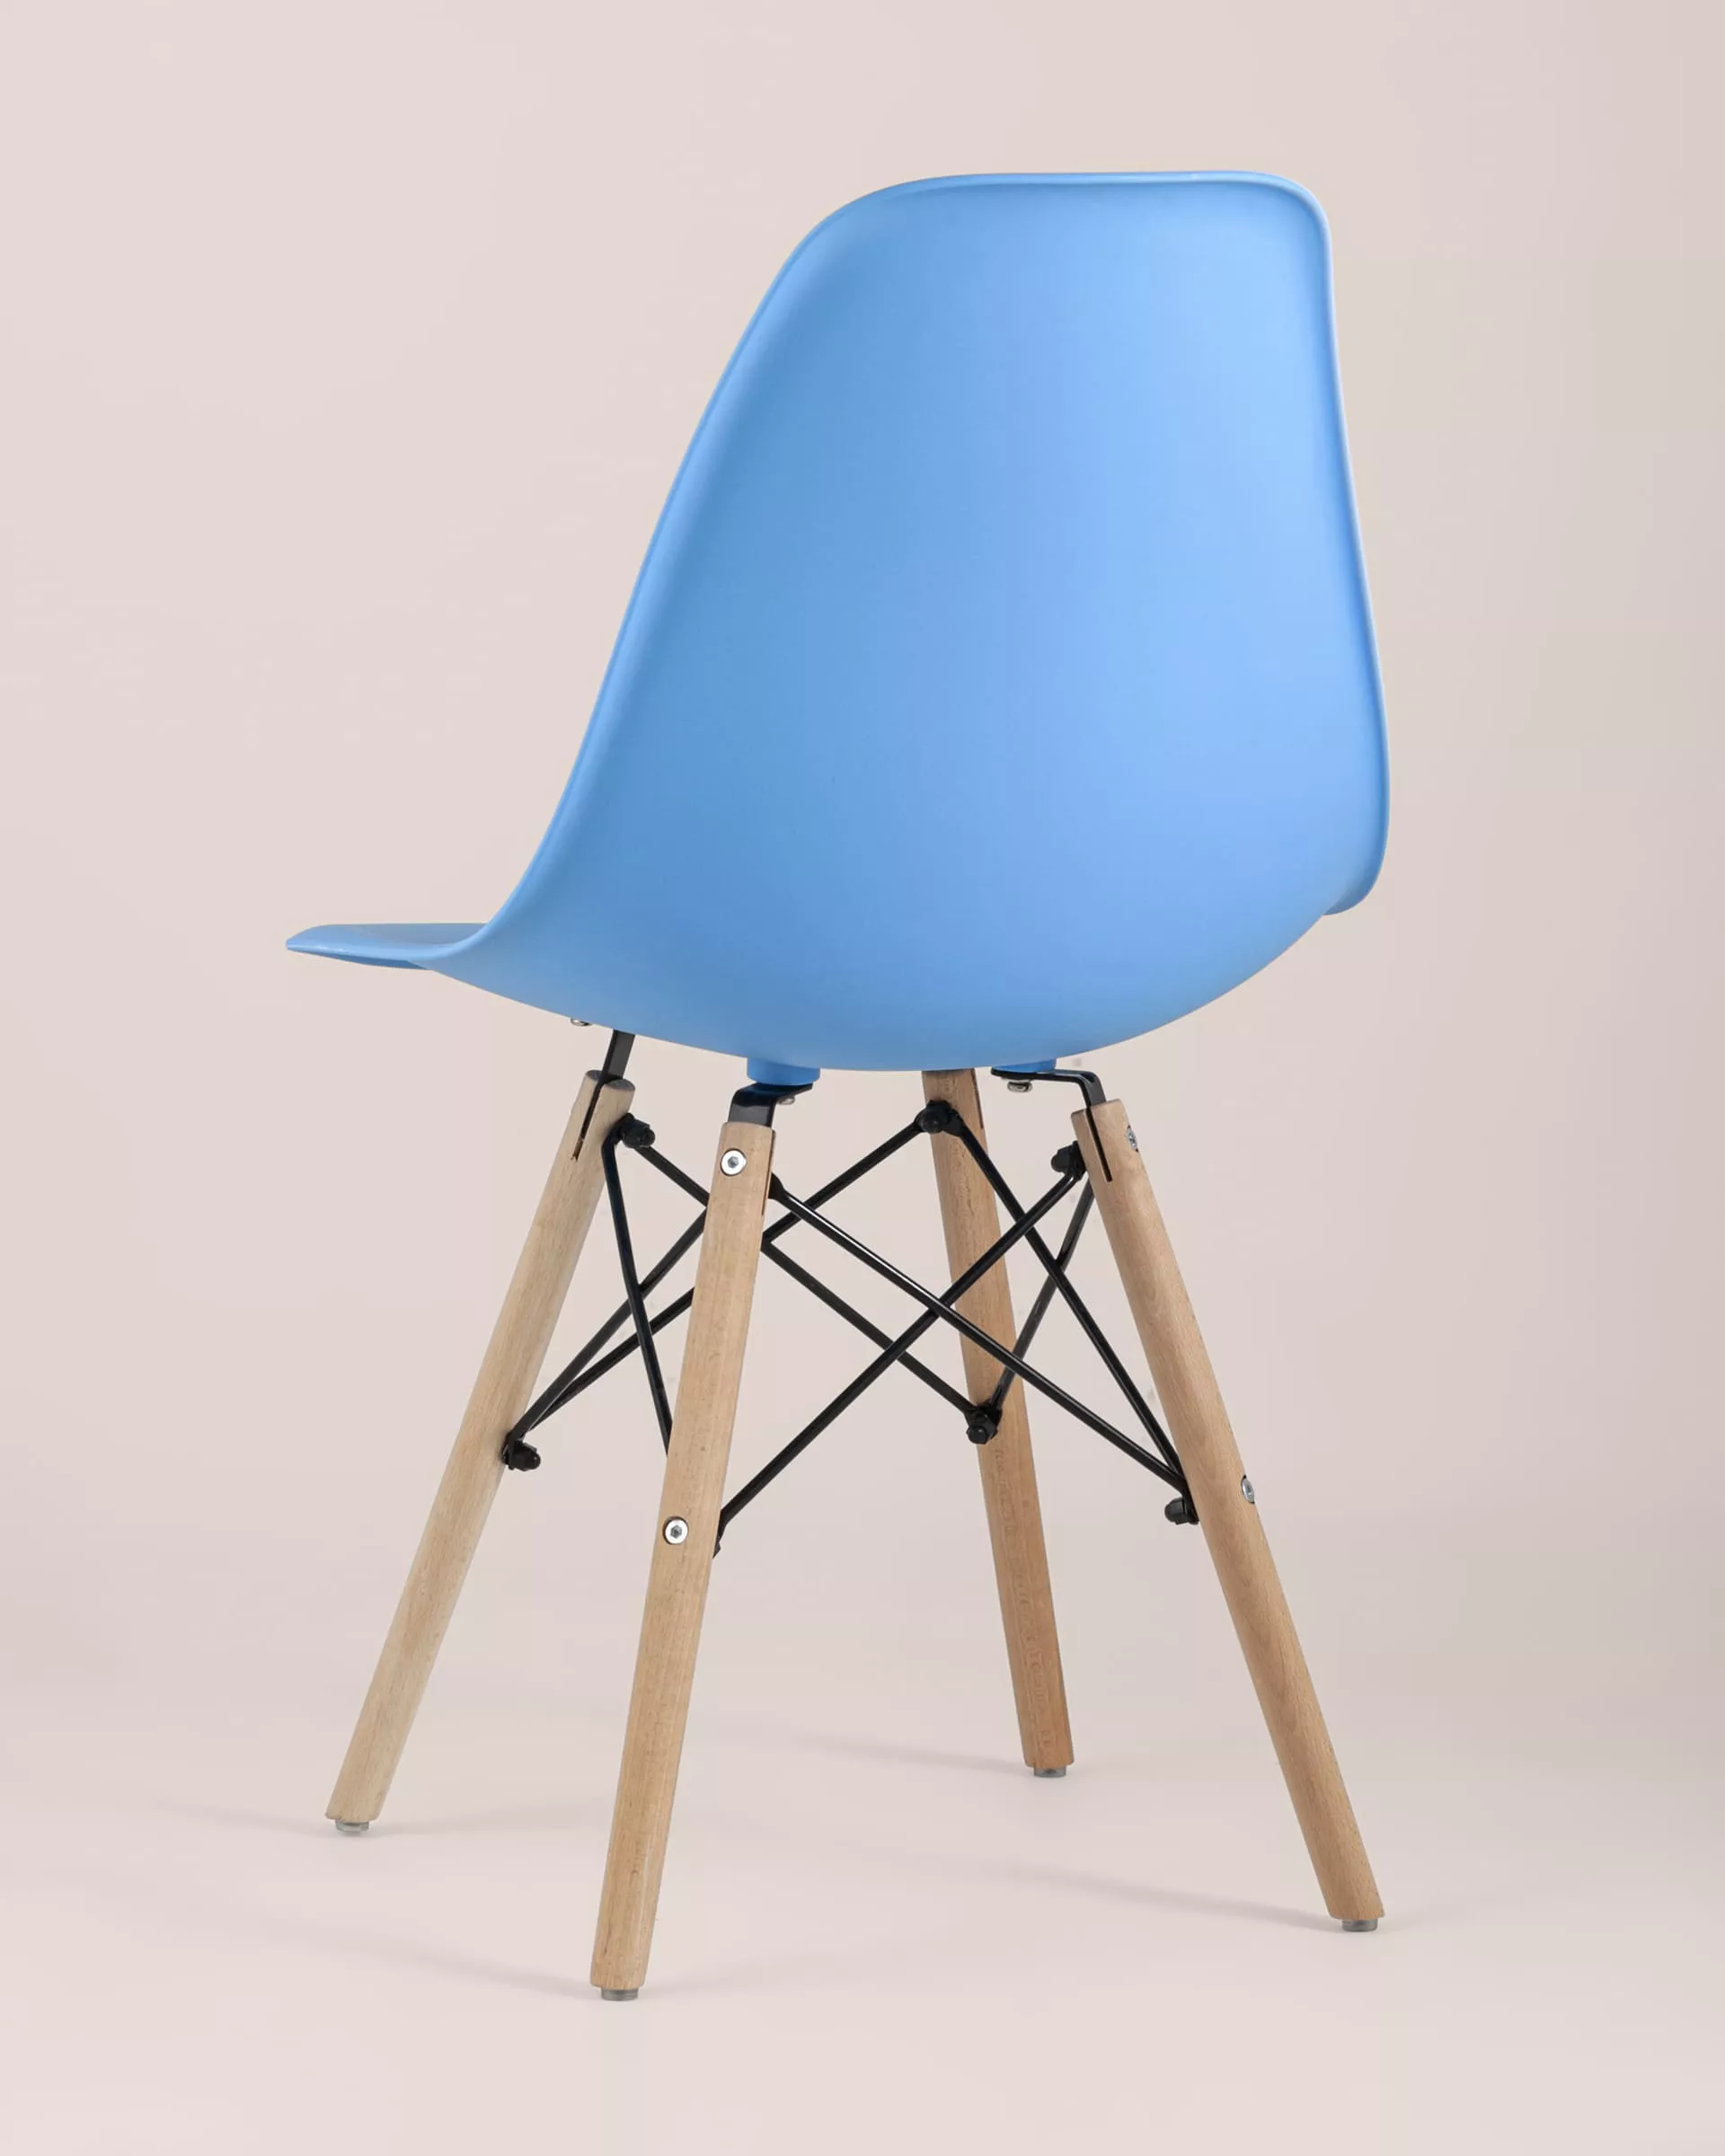 Комплект стульев Eames Style DSW голубой x4 шт